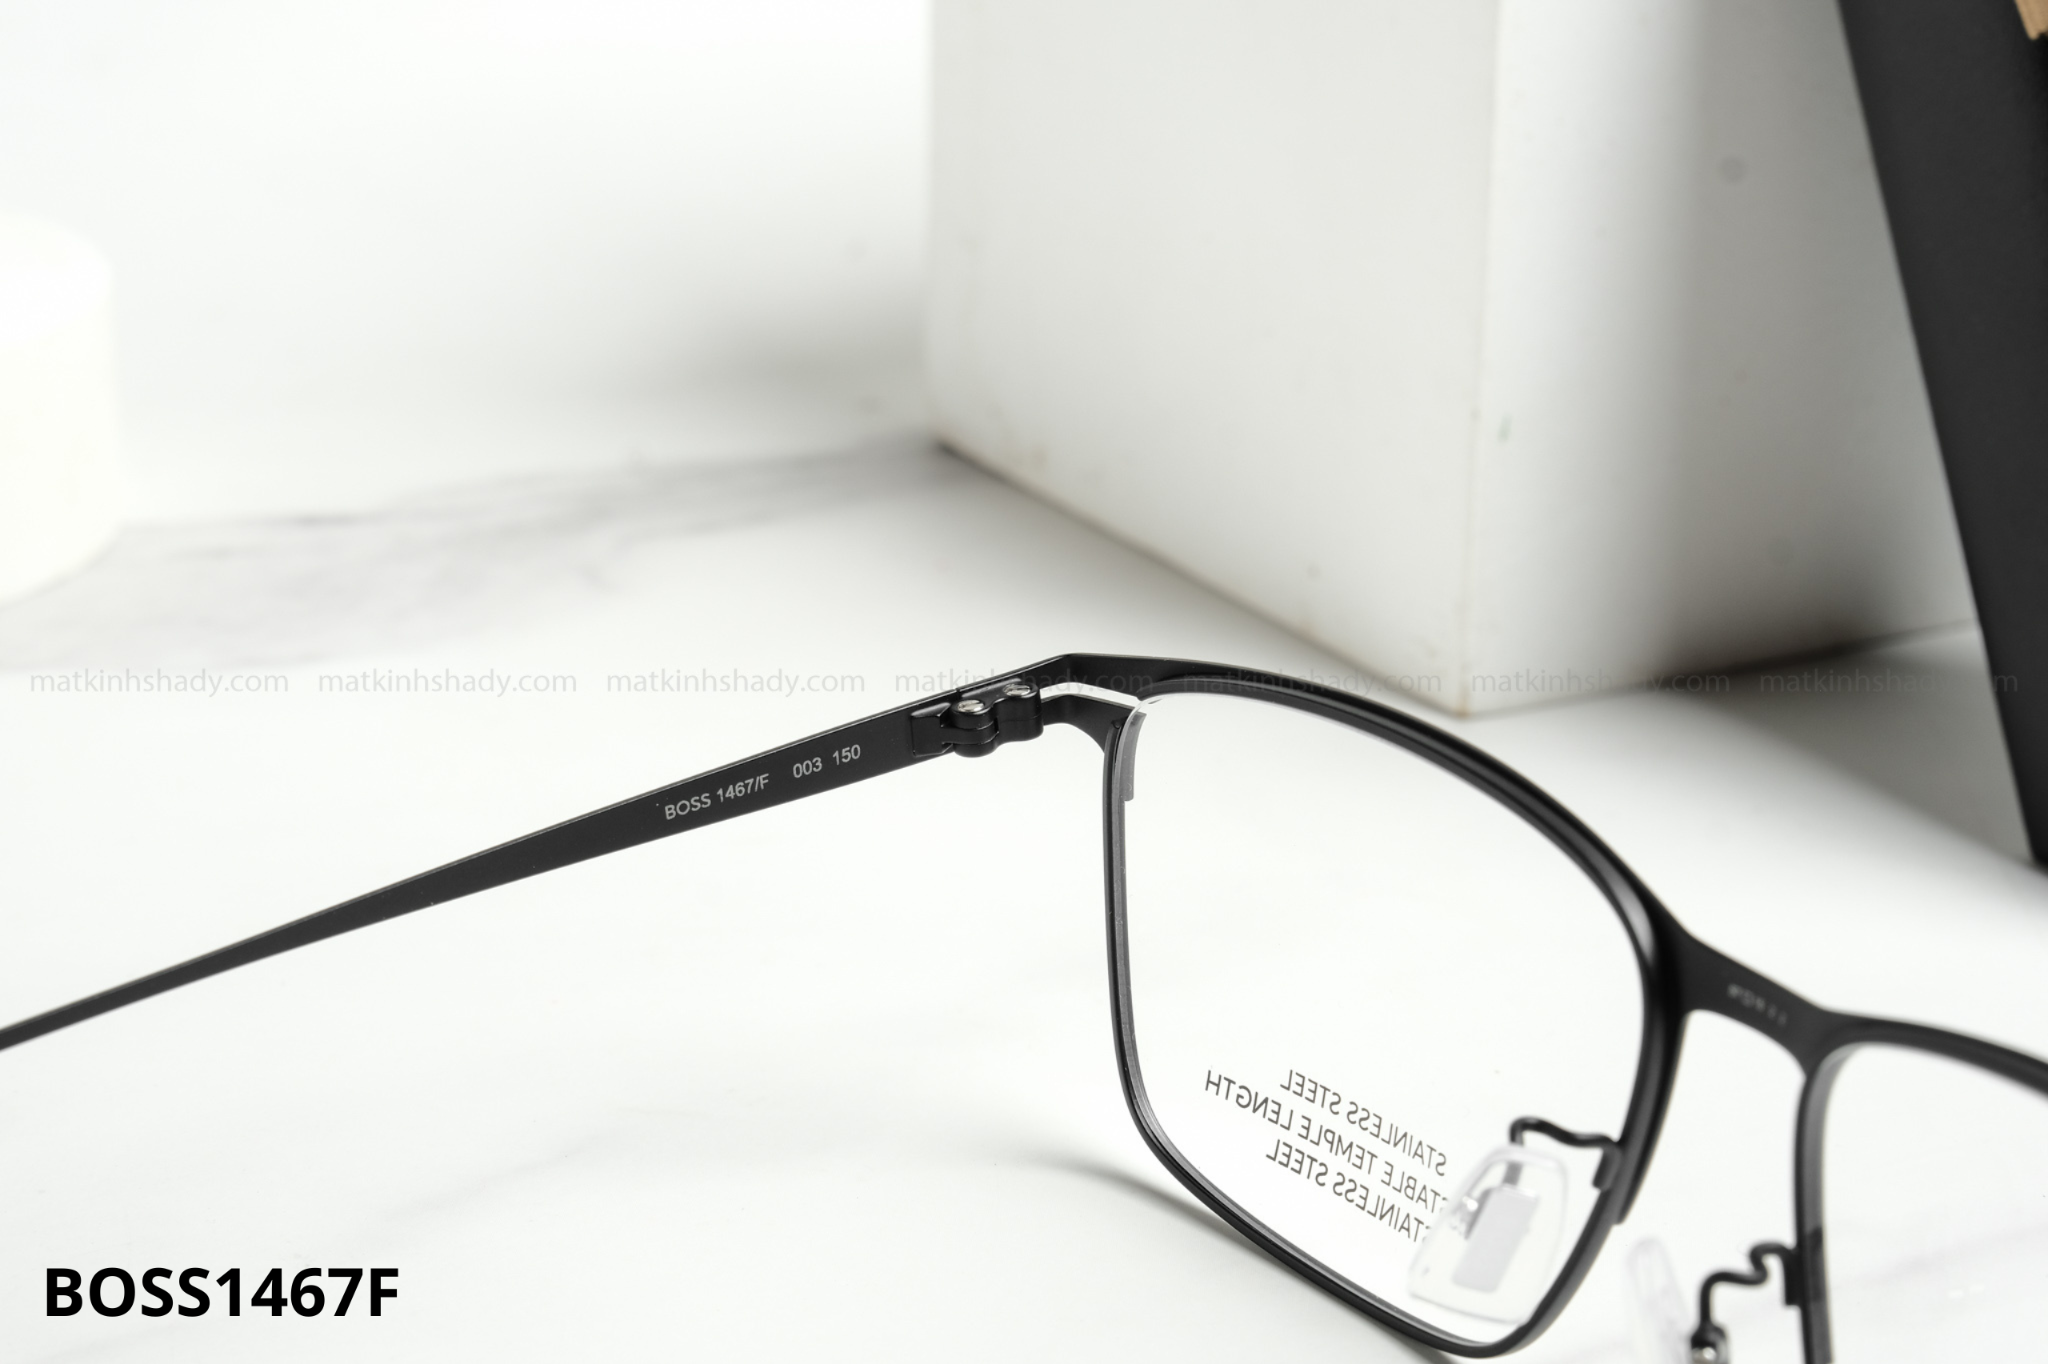  Boss Eyewear - Glasses - Boss1467F 